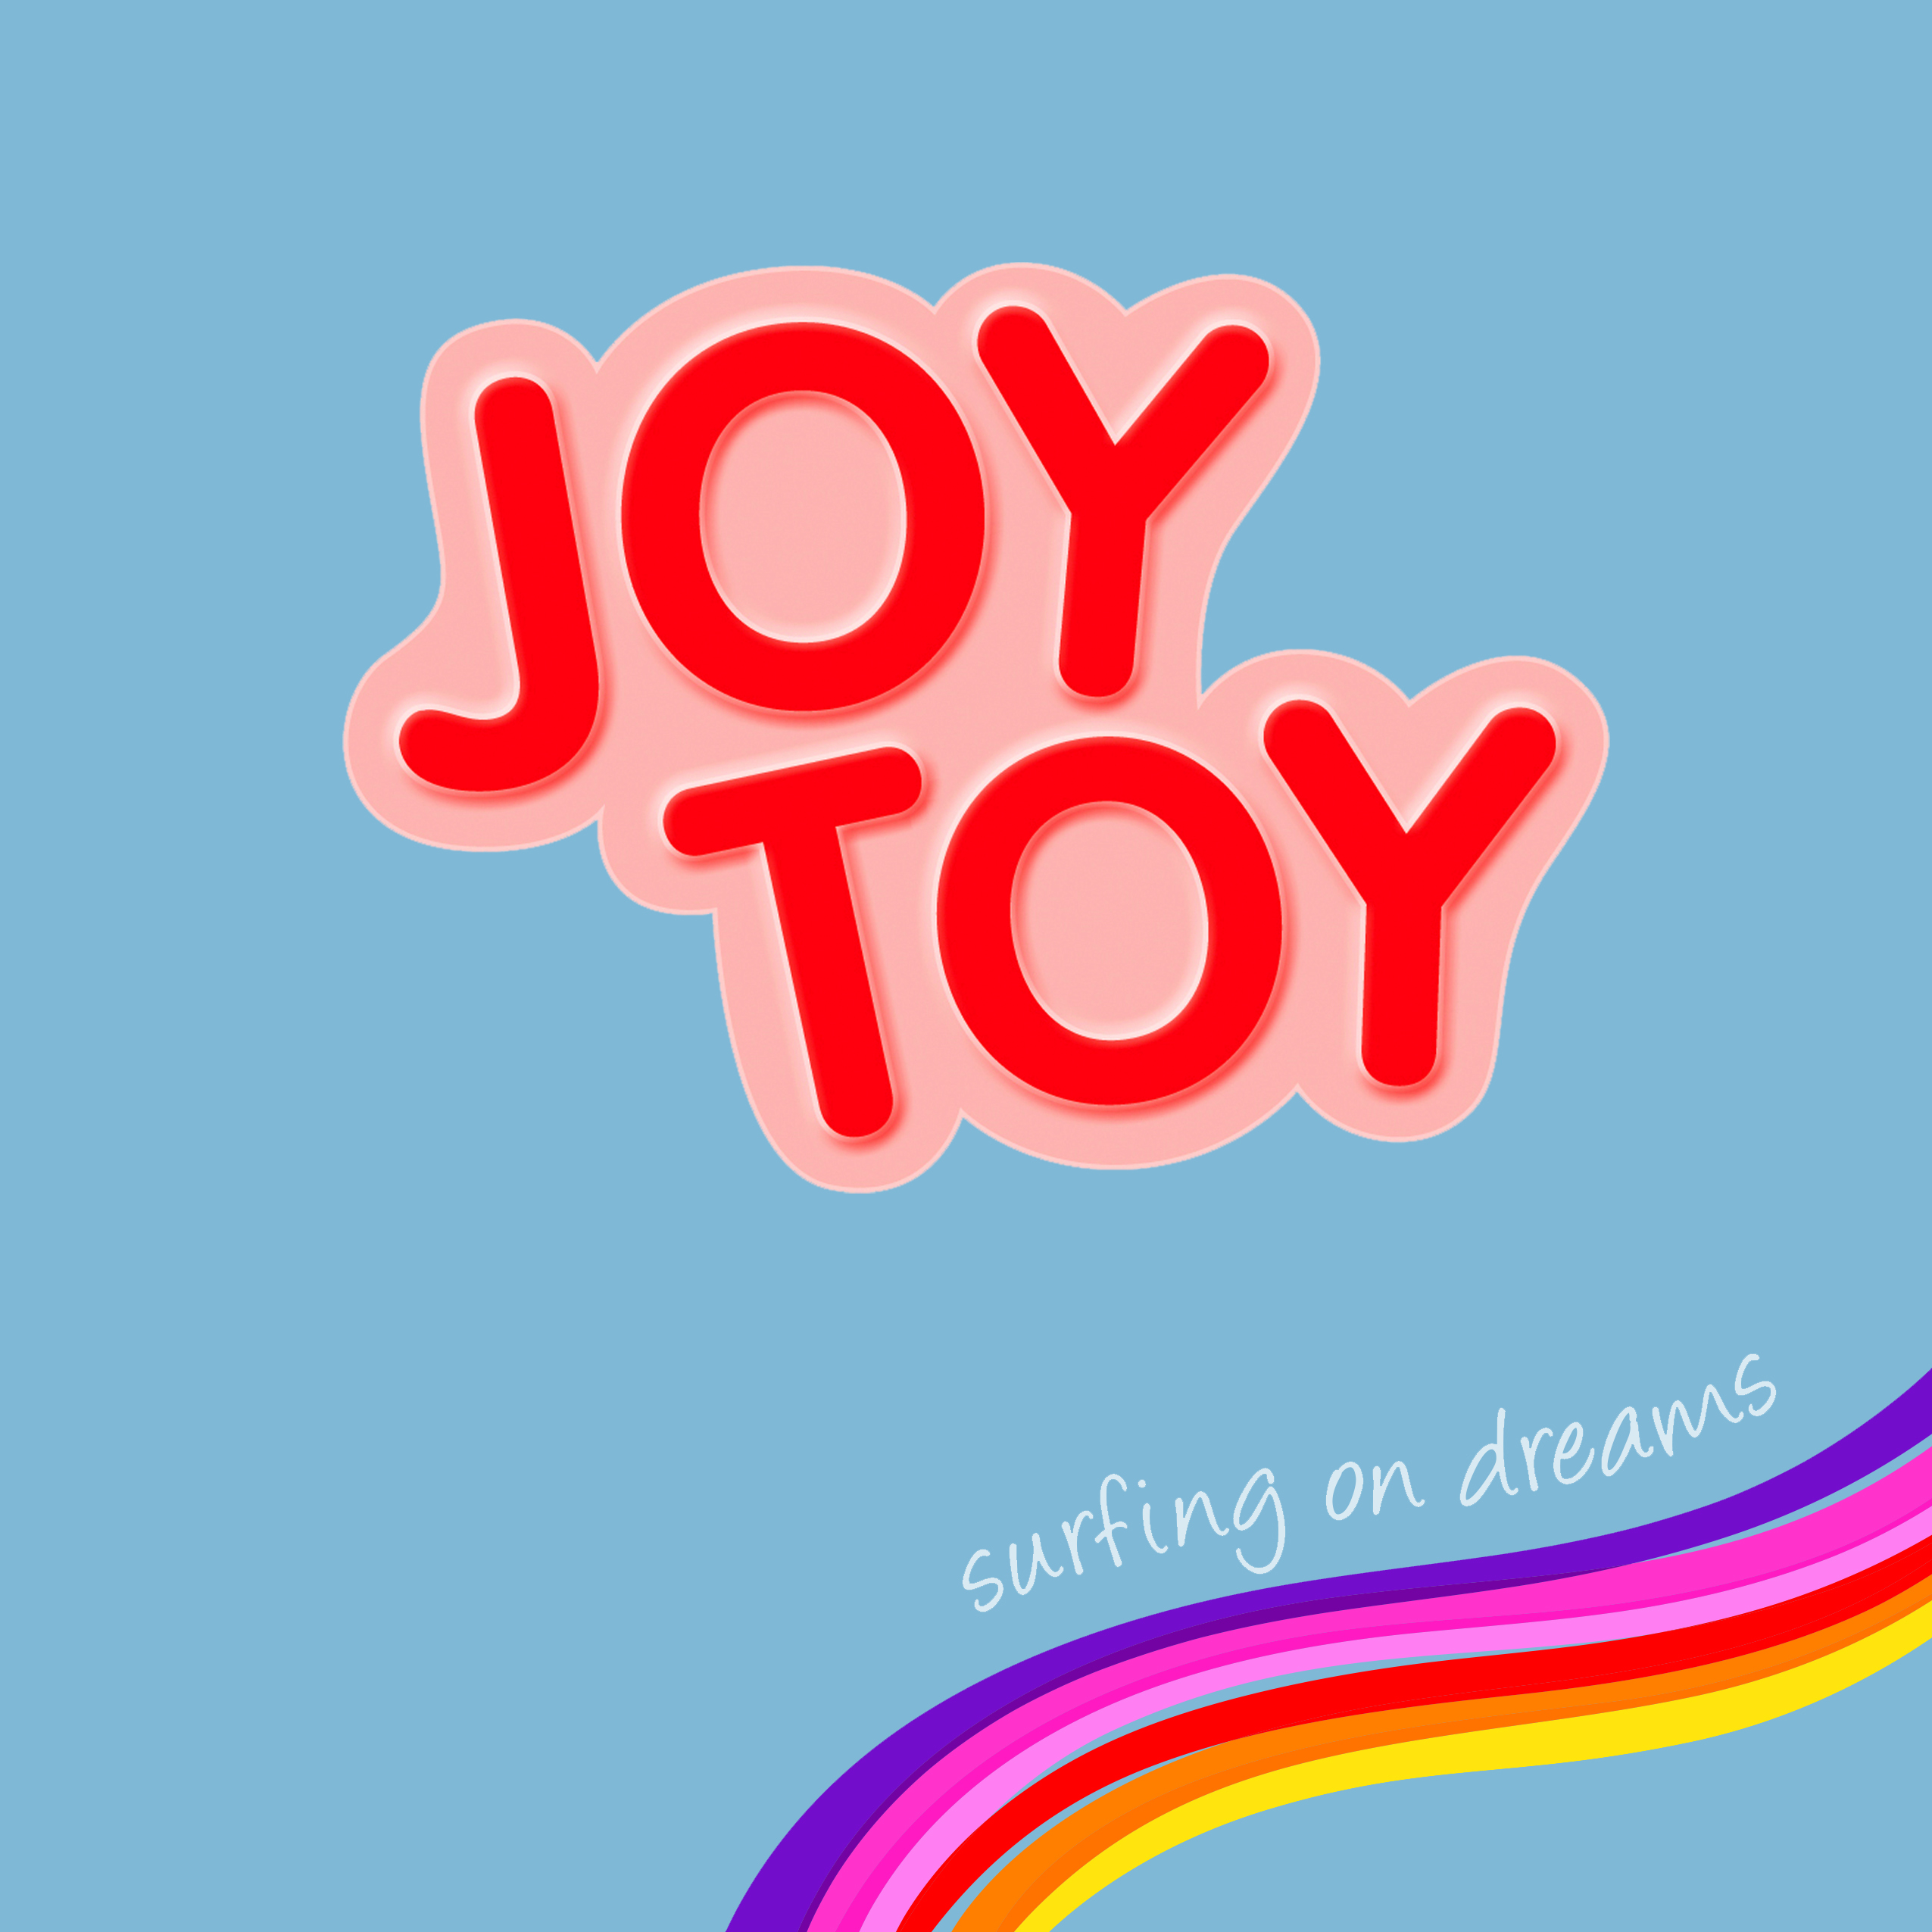 Joy Toy SpA